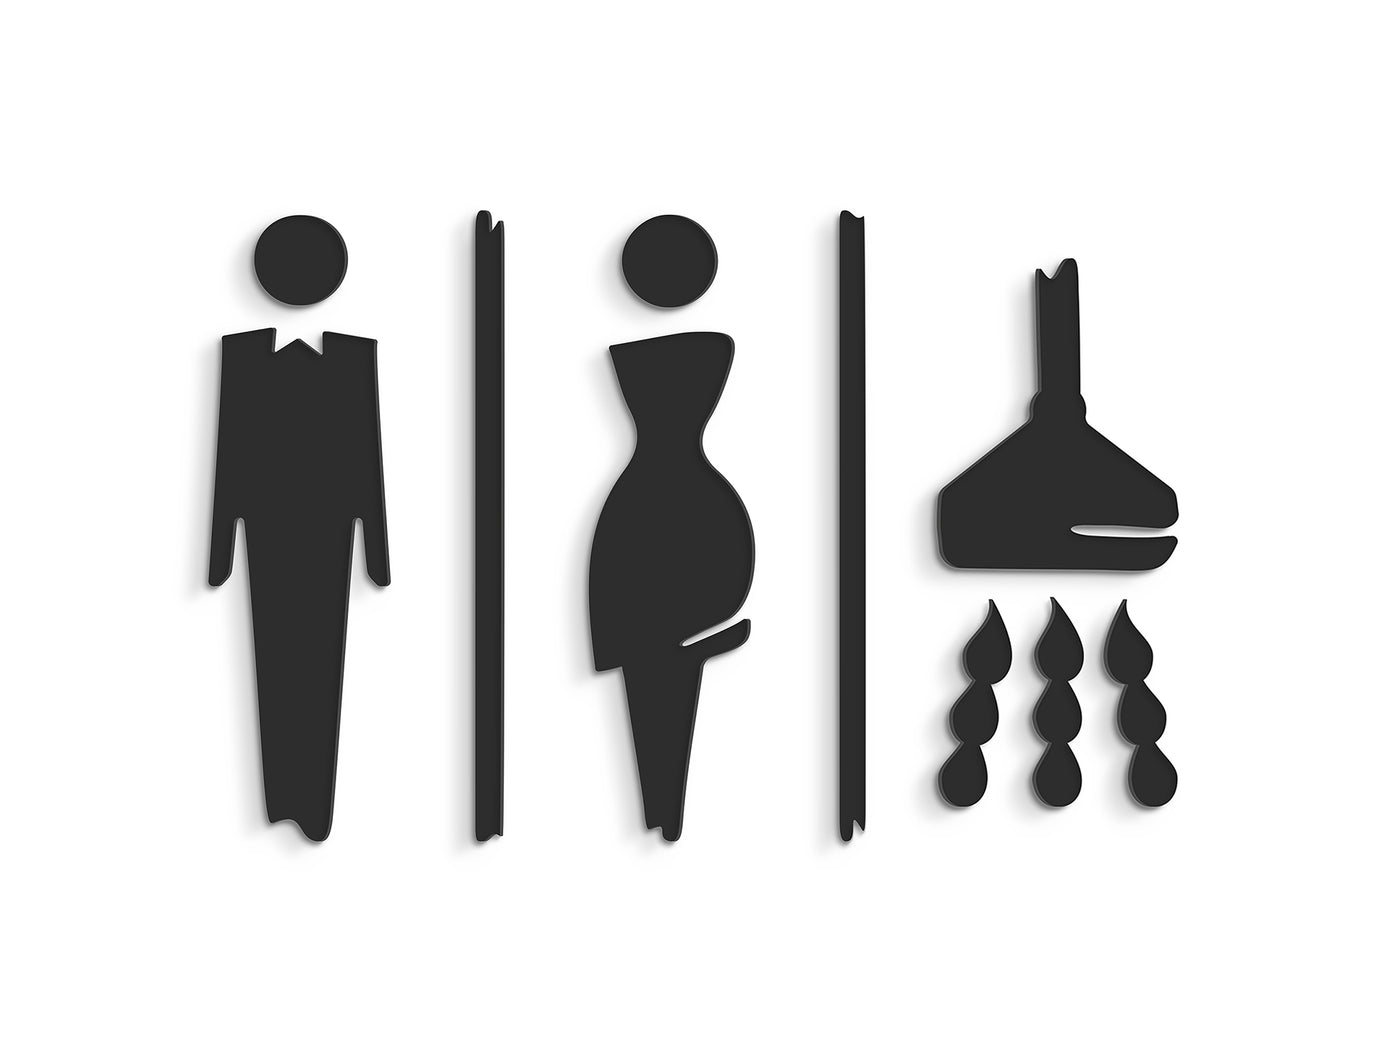 Elegant, Set 3x - Embossed Adhesive Symbols, Signage for Toilets -  Man, Woman, Shower restroom